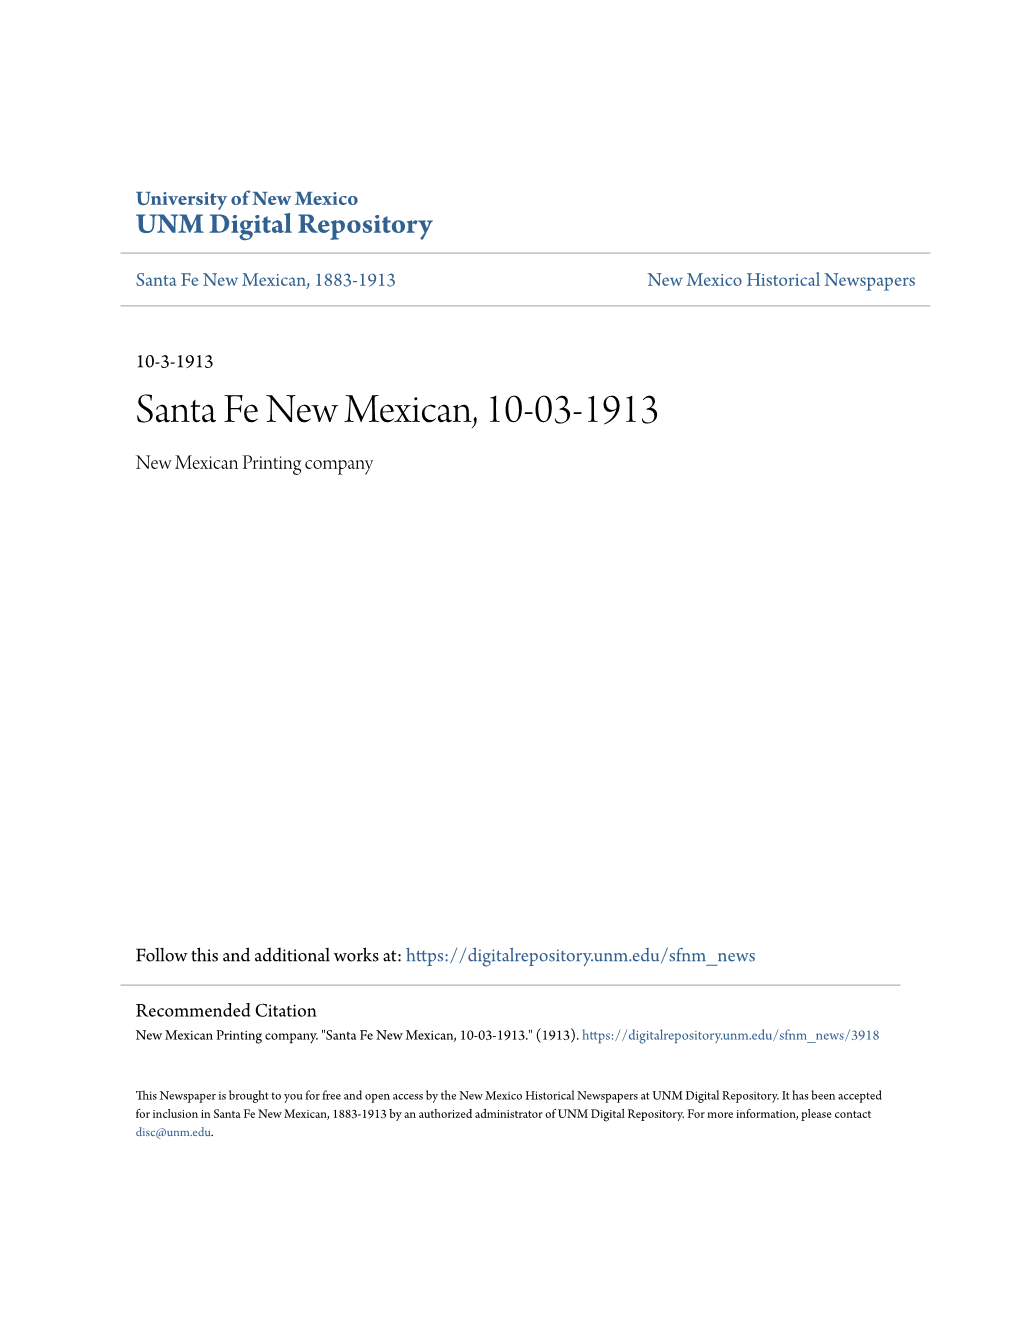 Santa Fe New Mexican, 10-03-1913 New Mexican Printing Company